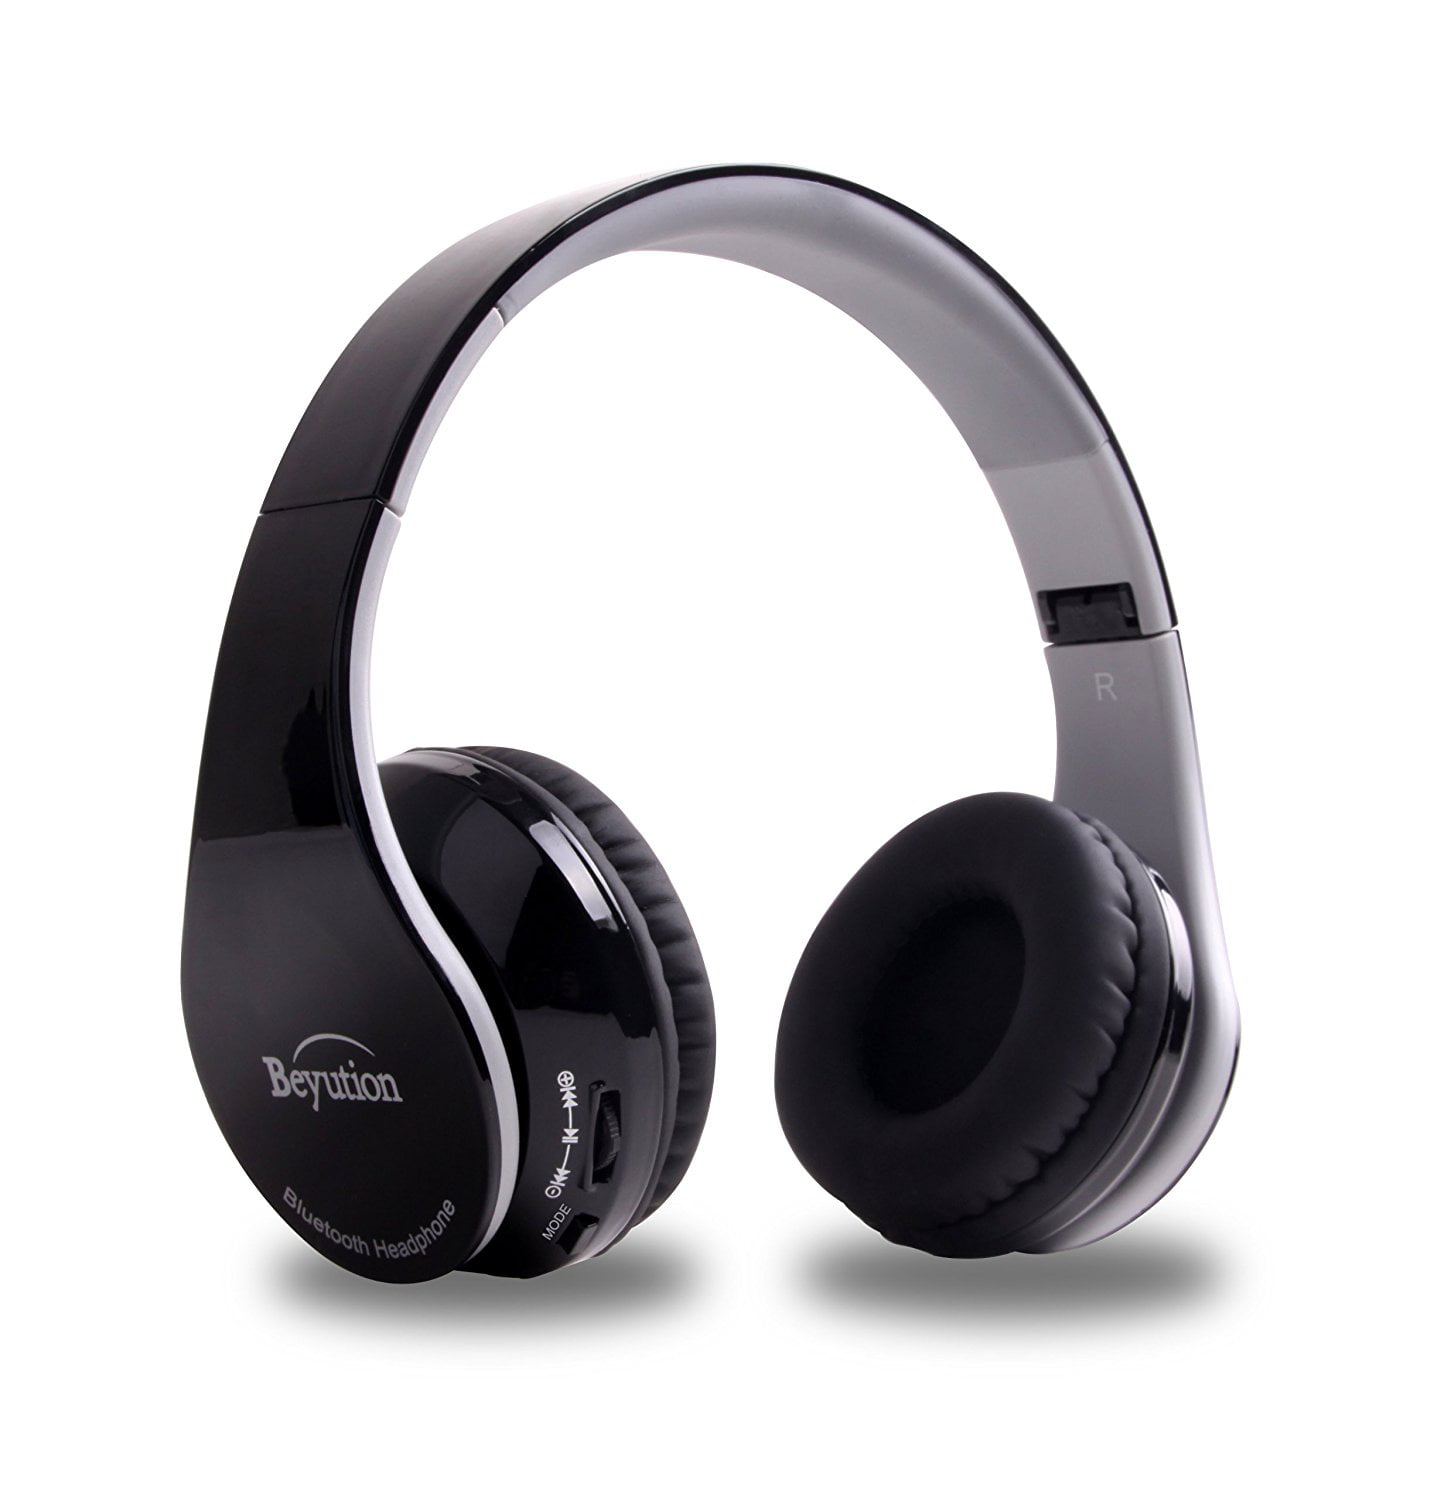 Beyution Wireless Bluetooth Headphones Over-ear HiFi Stereo Headset Built in Mic-phone Sport Over Head earphones for Android Samsung iPhone Smartphones-Black